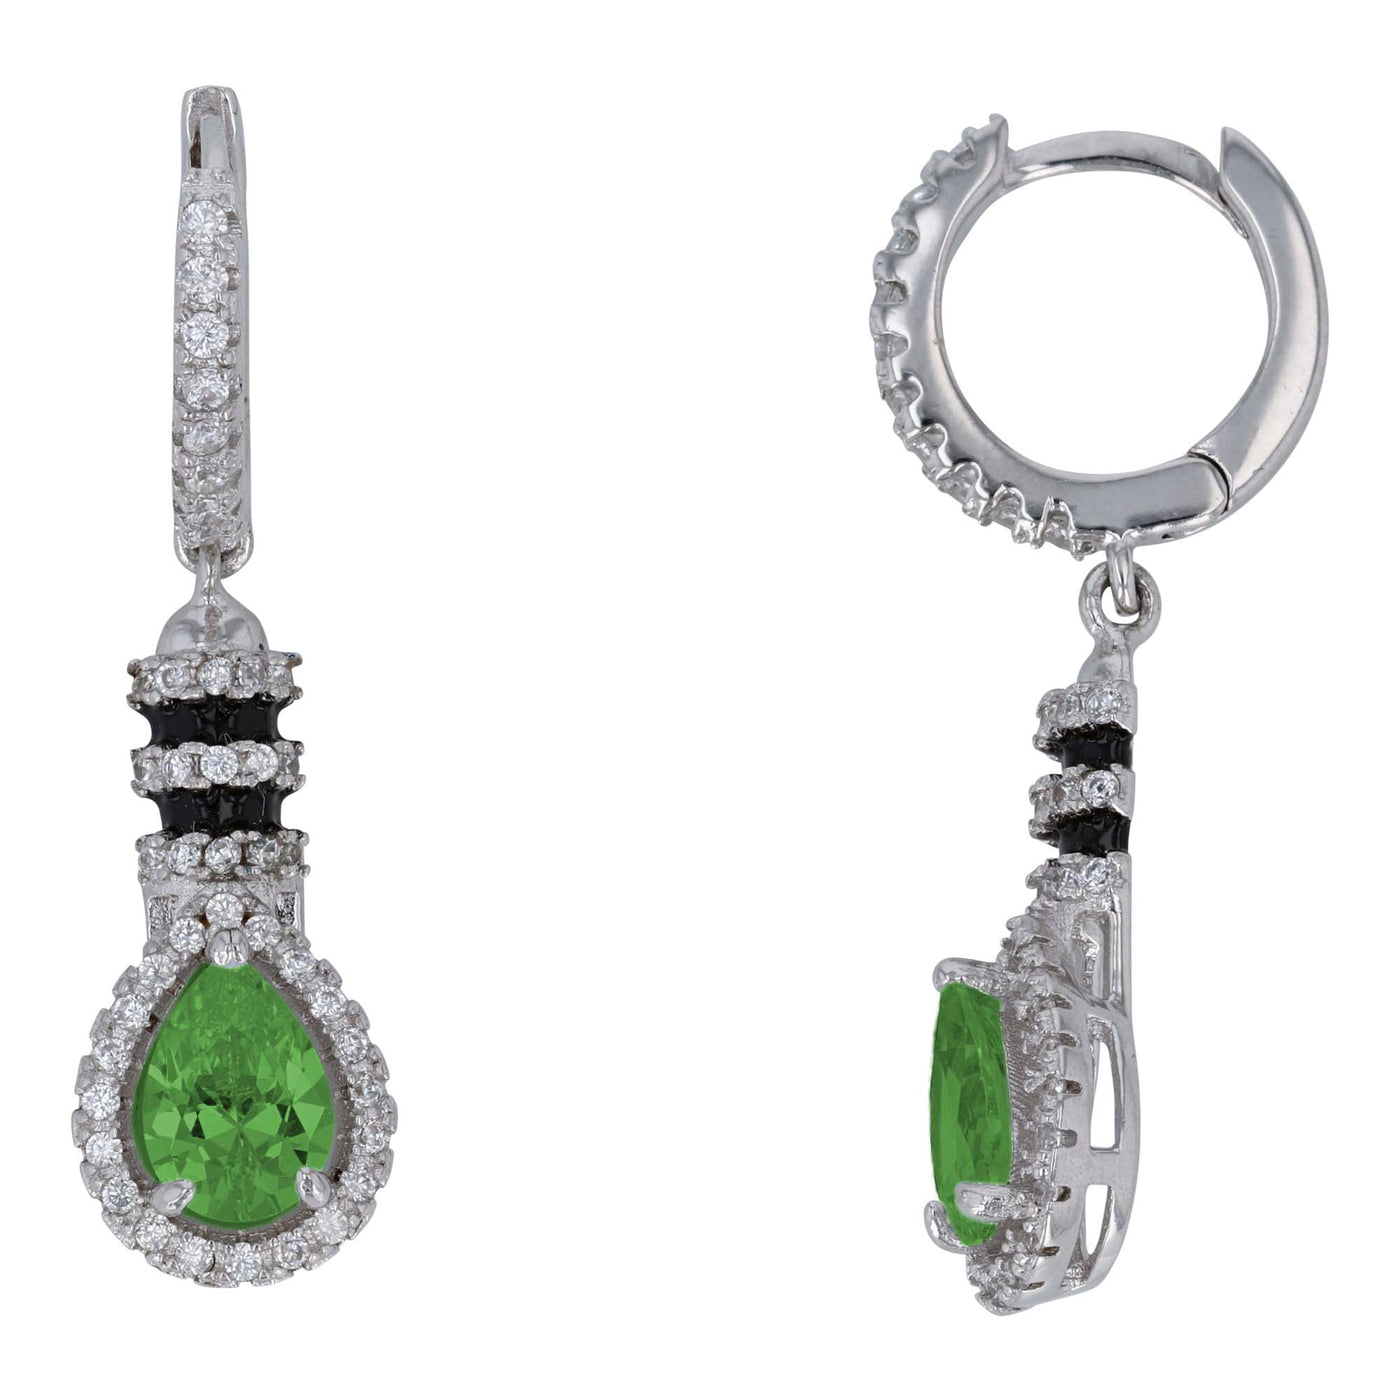 Rebecca Sloane Silver CZ Teadrop & Large Green CZ Dangle Earrings